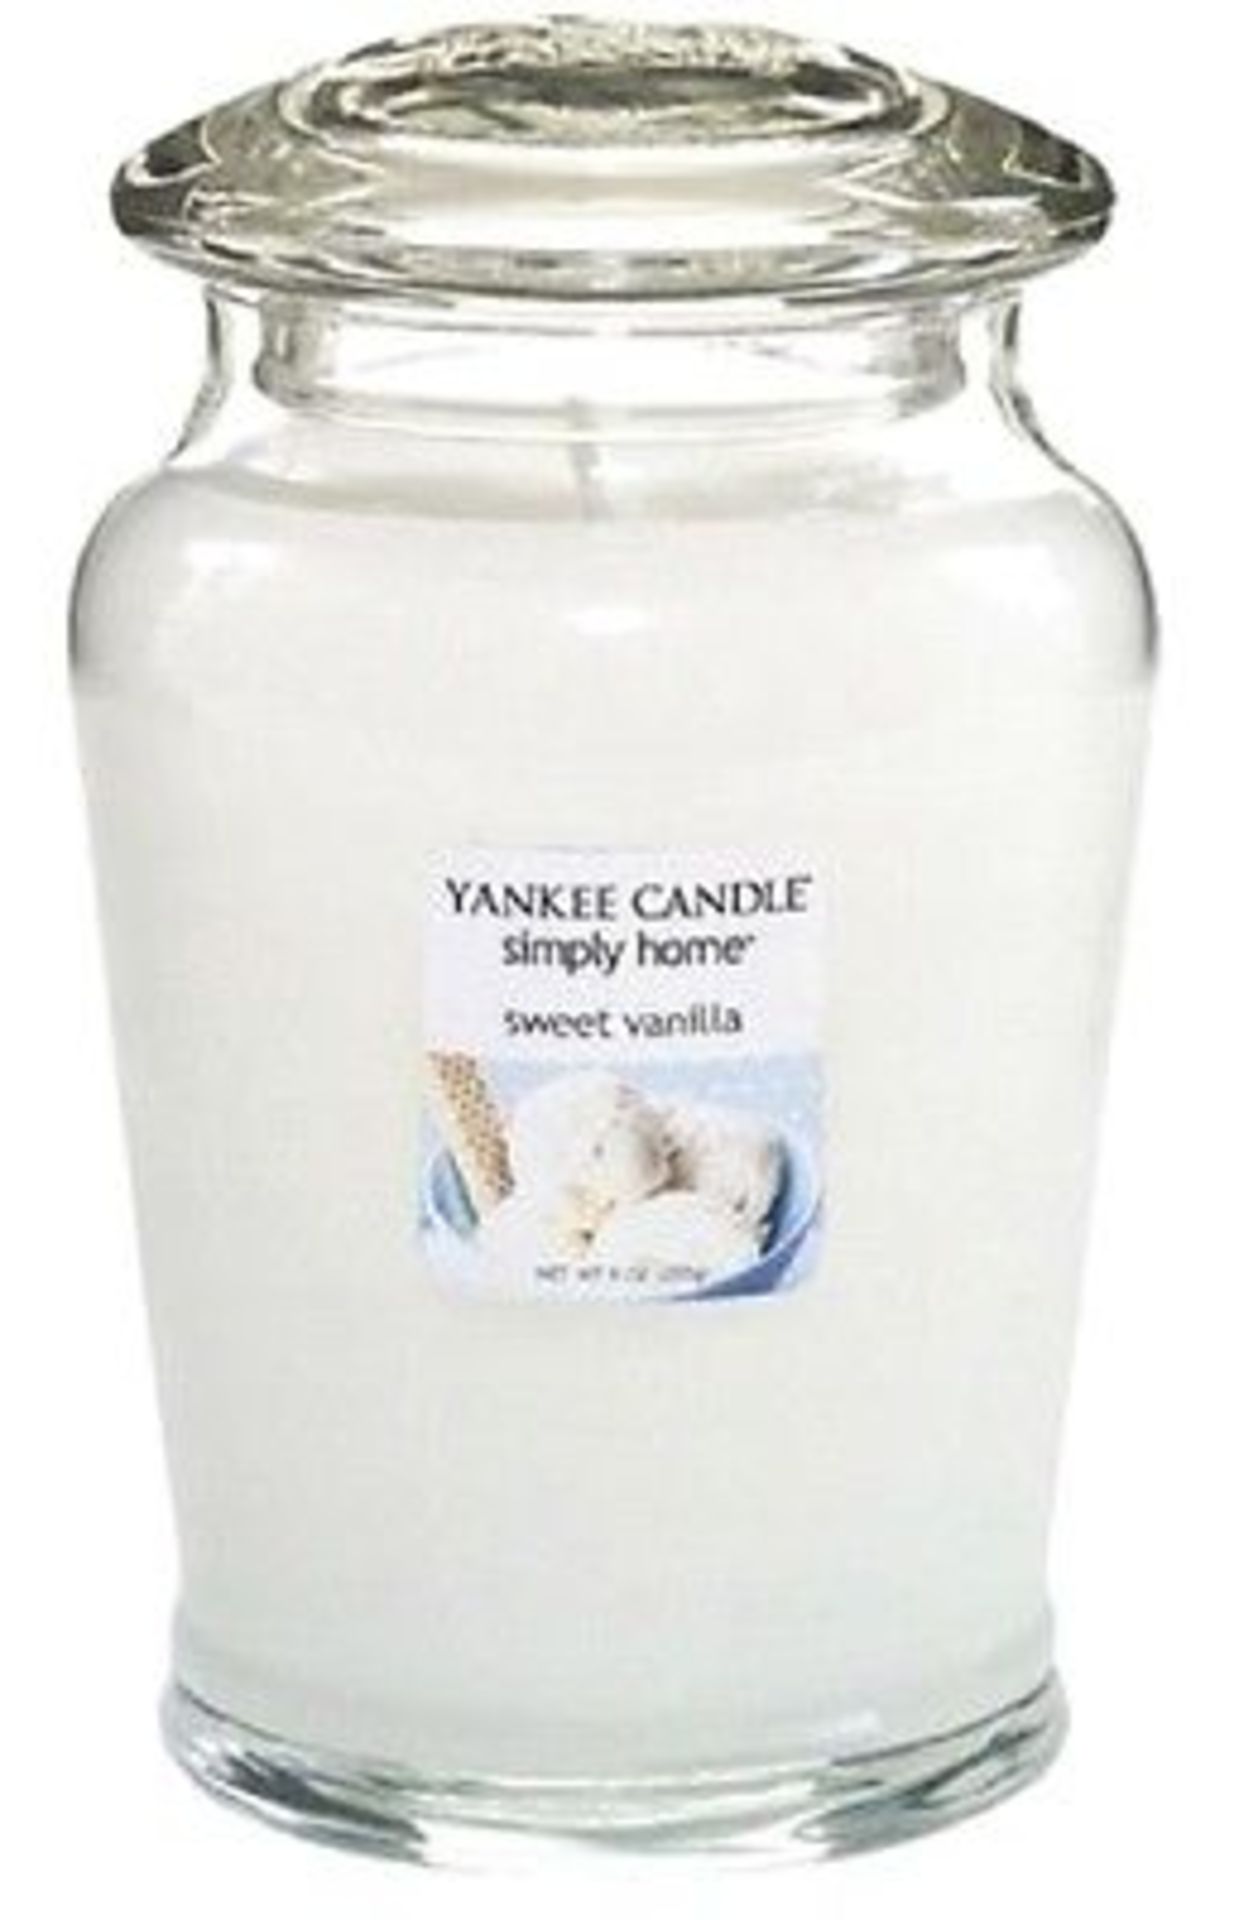 V *TRADE QTY* Brand New Yankee Candle Jar Medium Sweet Vanilla 12oz Internet Price £10.99 X 6 YOUR